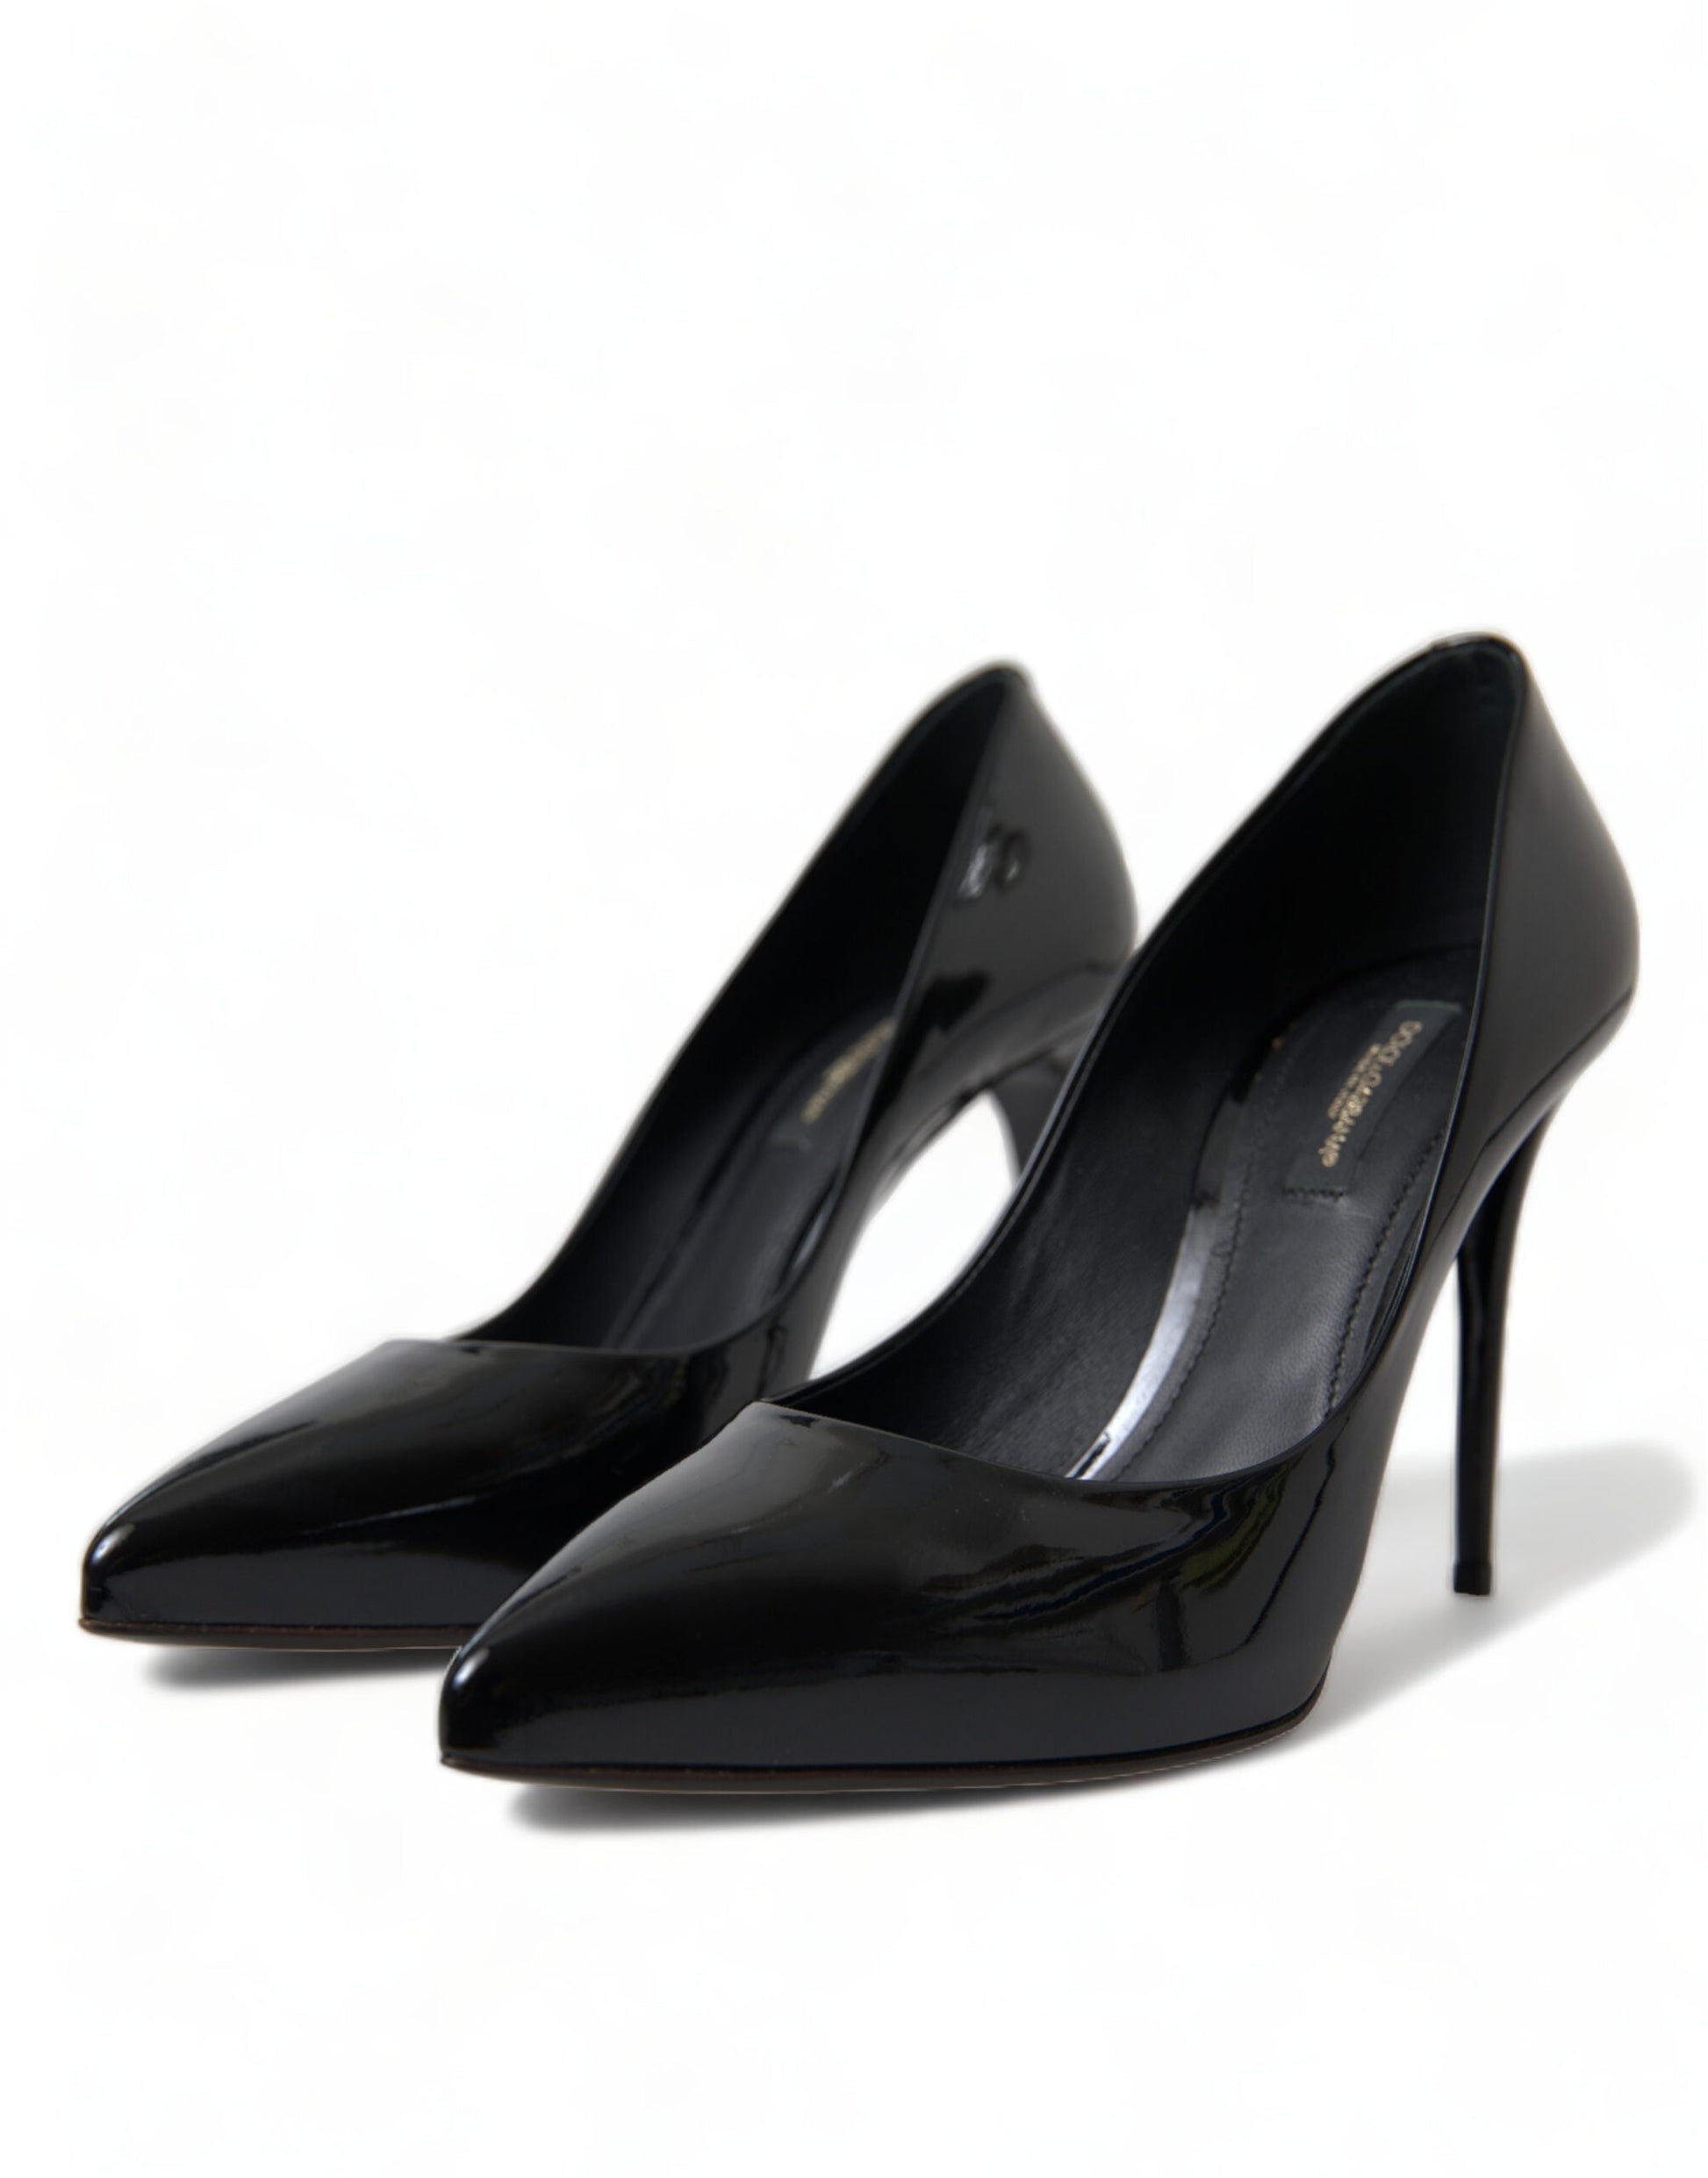 Dolce & Gabbana Black Patent Leather Pumps Heels Shoes | Fashionsarah.com